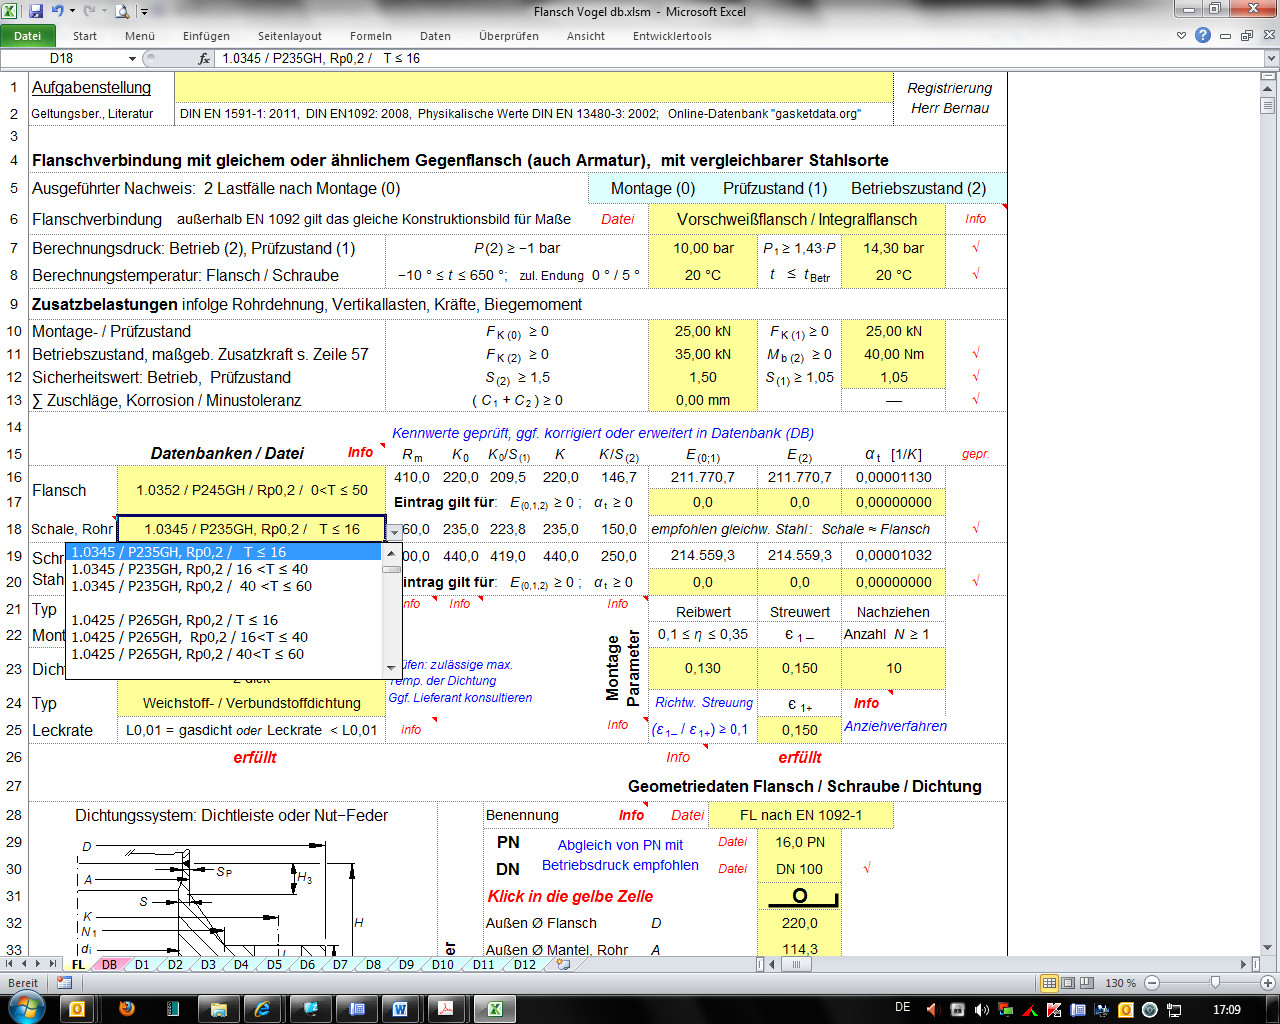 Flanschberechnungen nach DIN EN 1591-1: 2011 (Download)